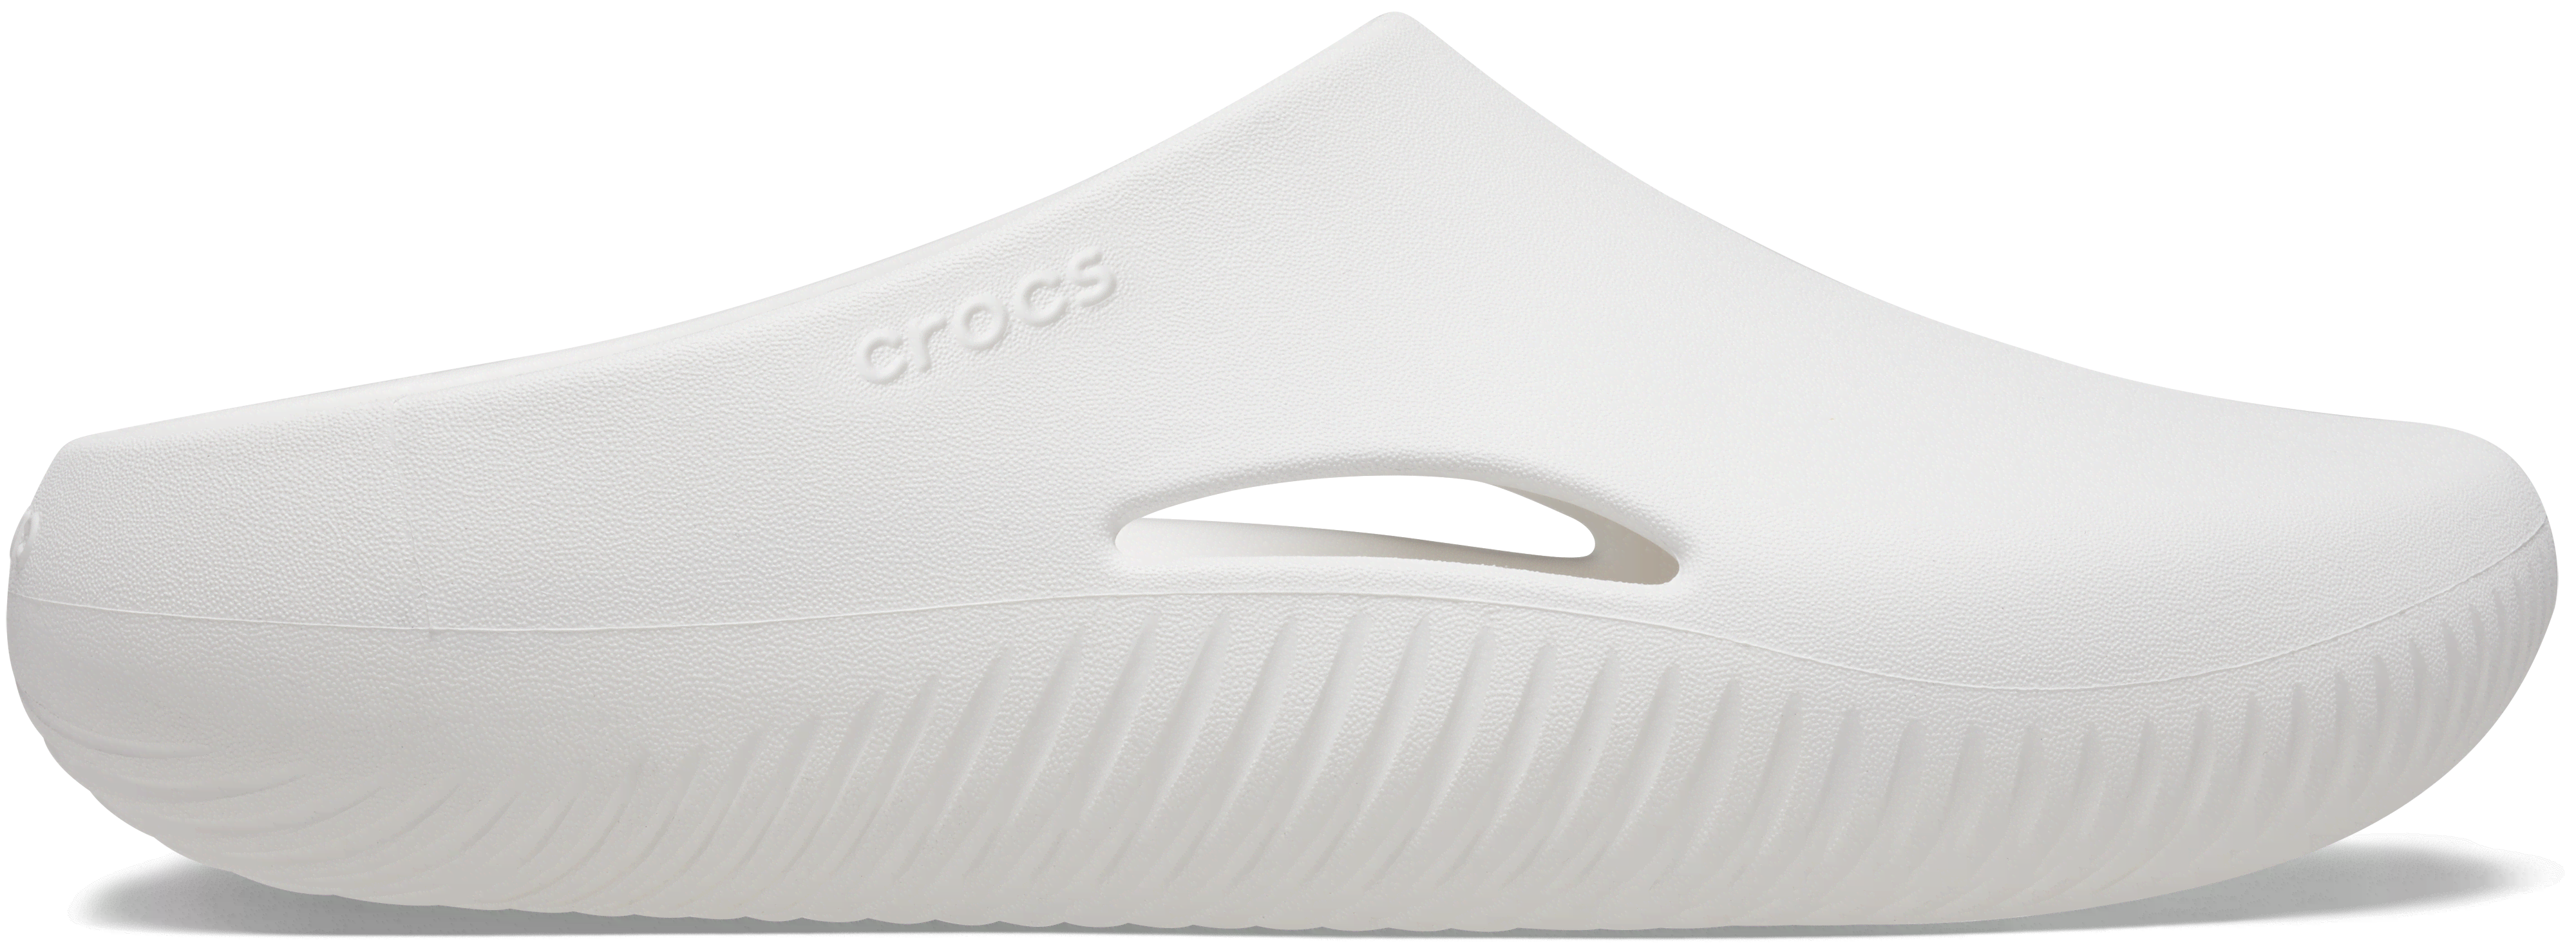 Crocs | Unisex | Mellow Recovery | Clogs | White | W5/M4